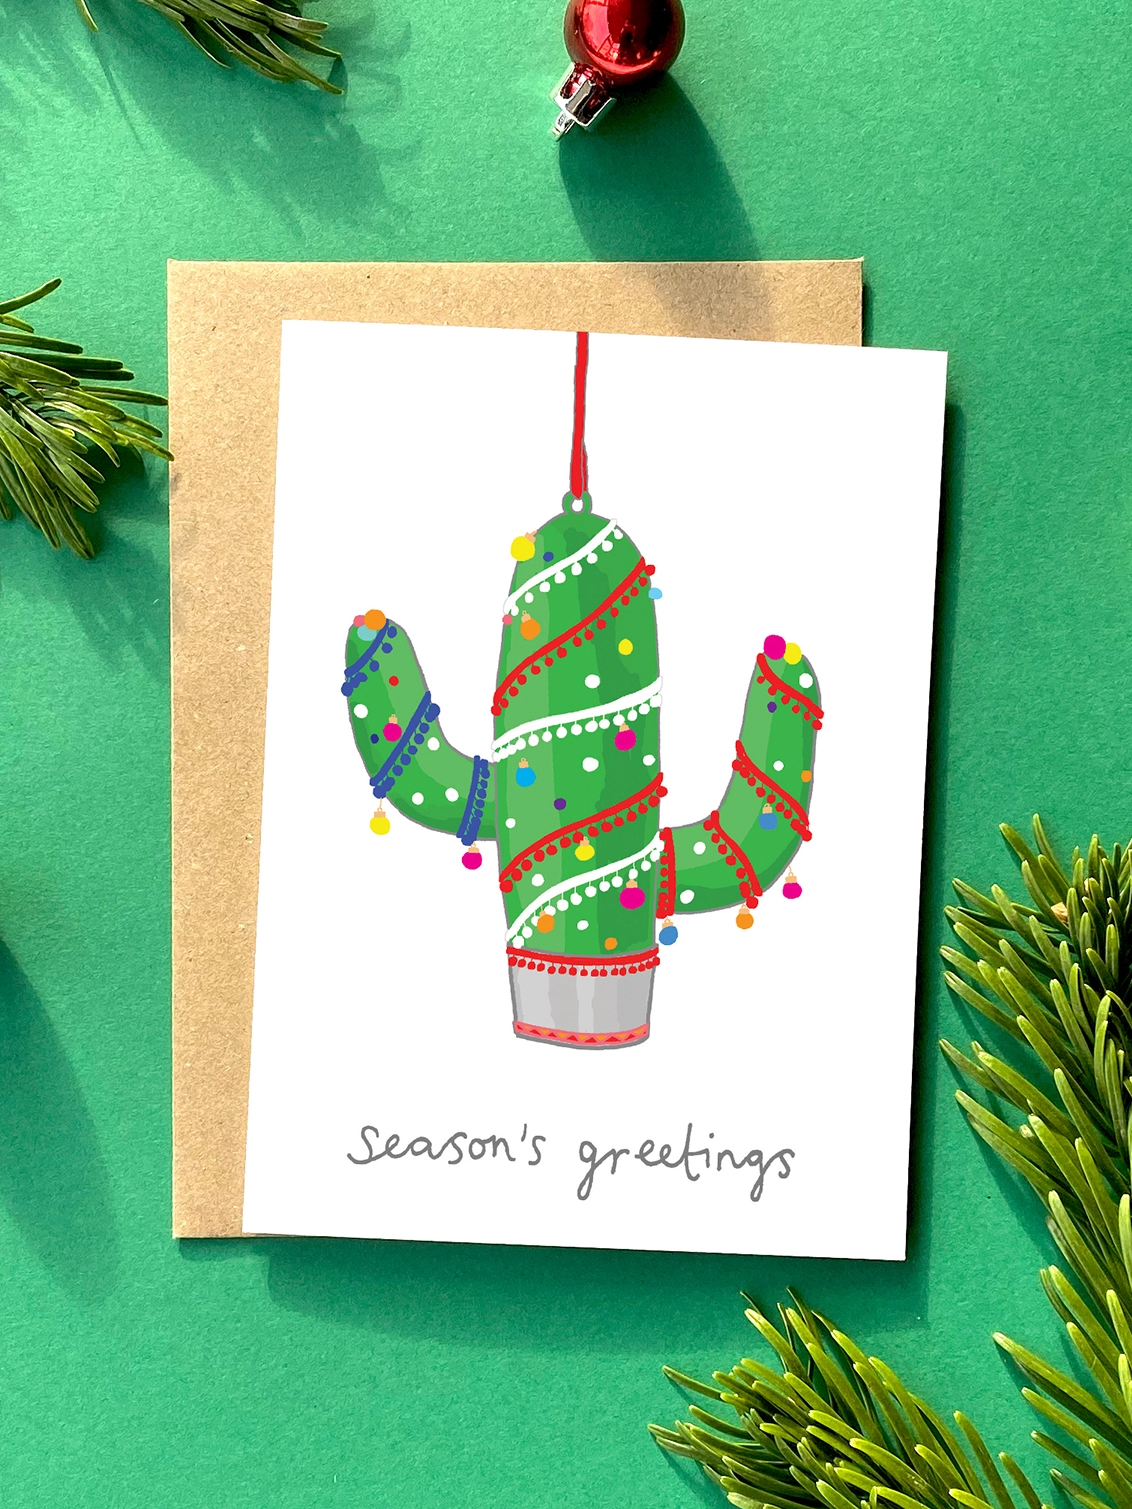 Christmas card with jolly cactus Christmas decoration